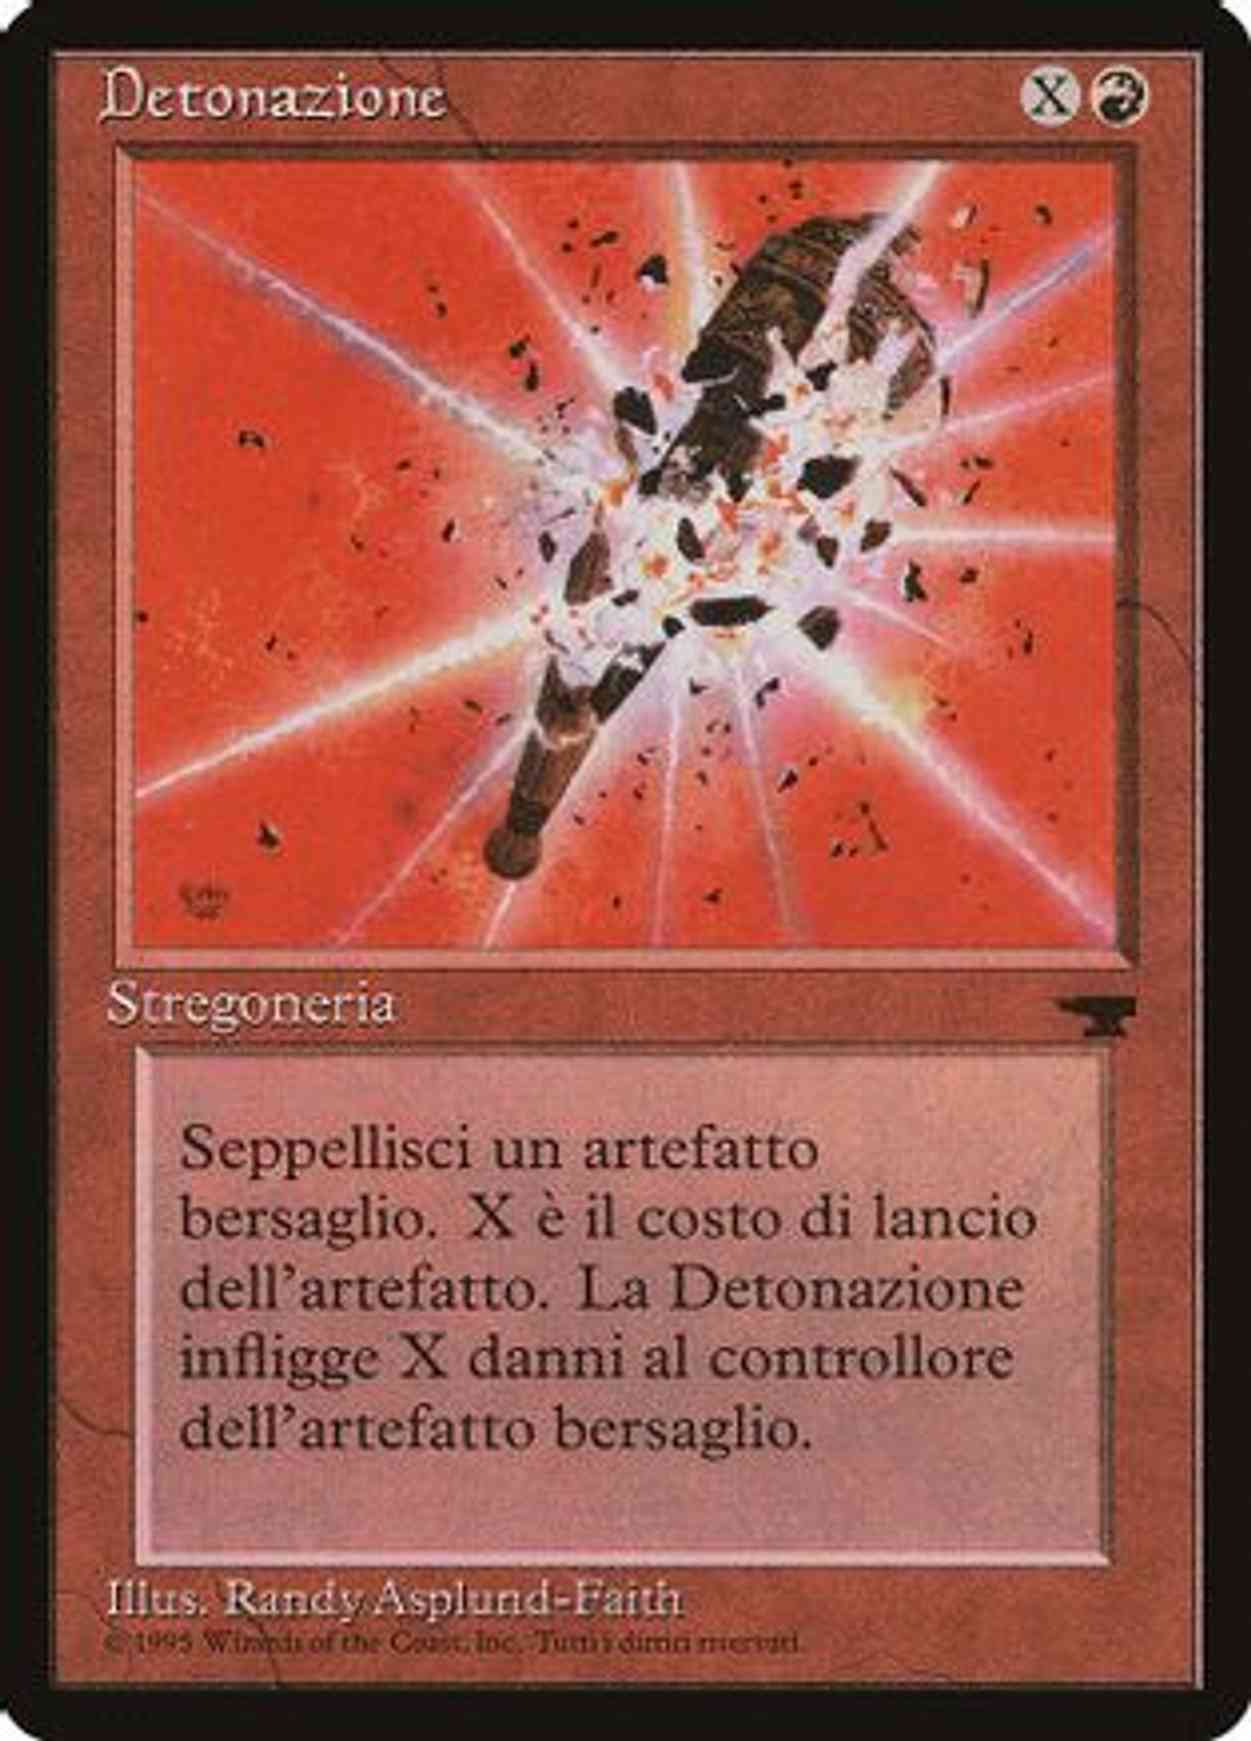 Detonate (Italian) - "Detonazione" magic card front